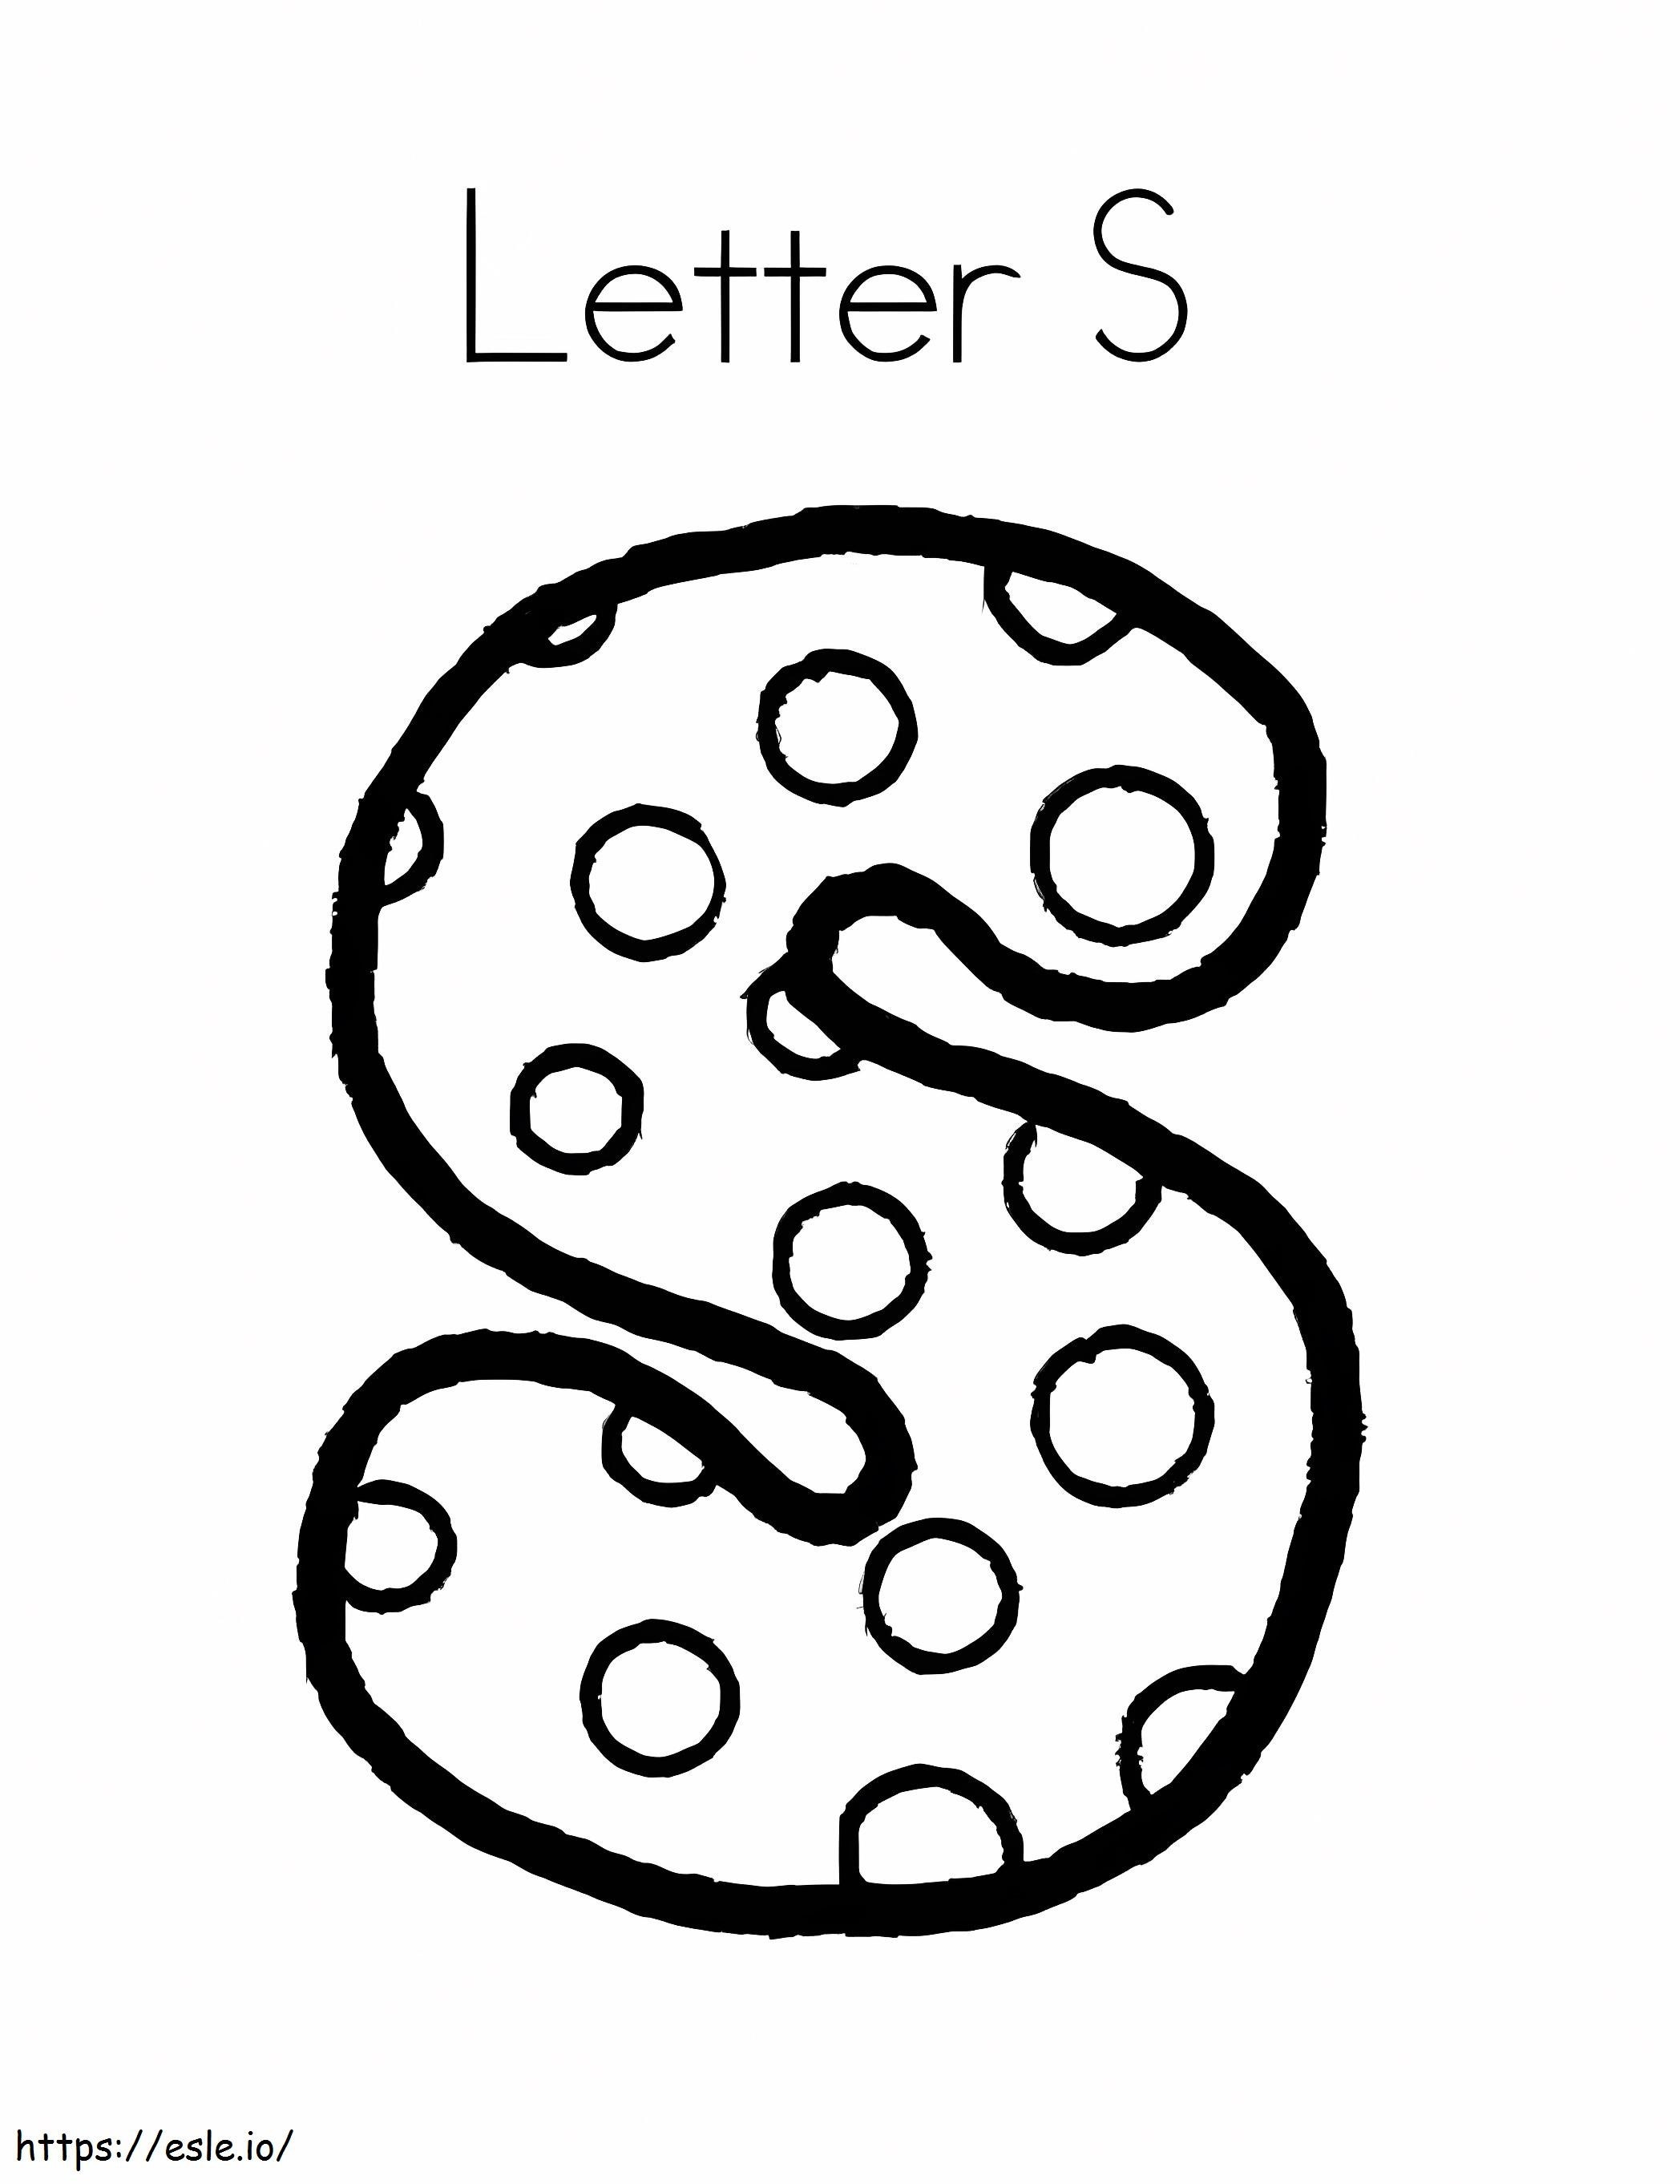 Letter S Lunares coloring page